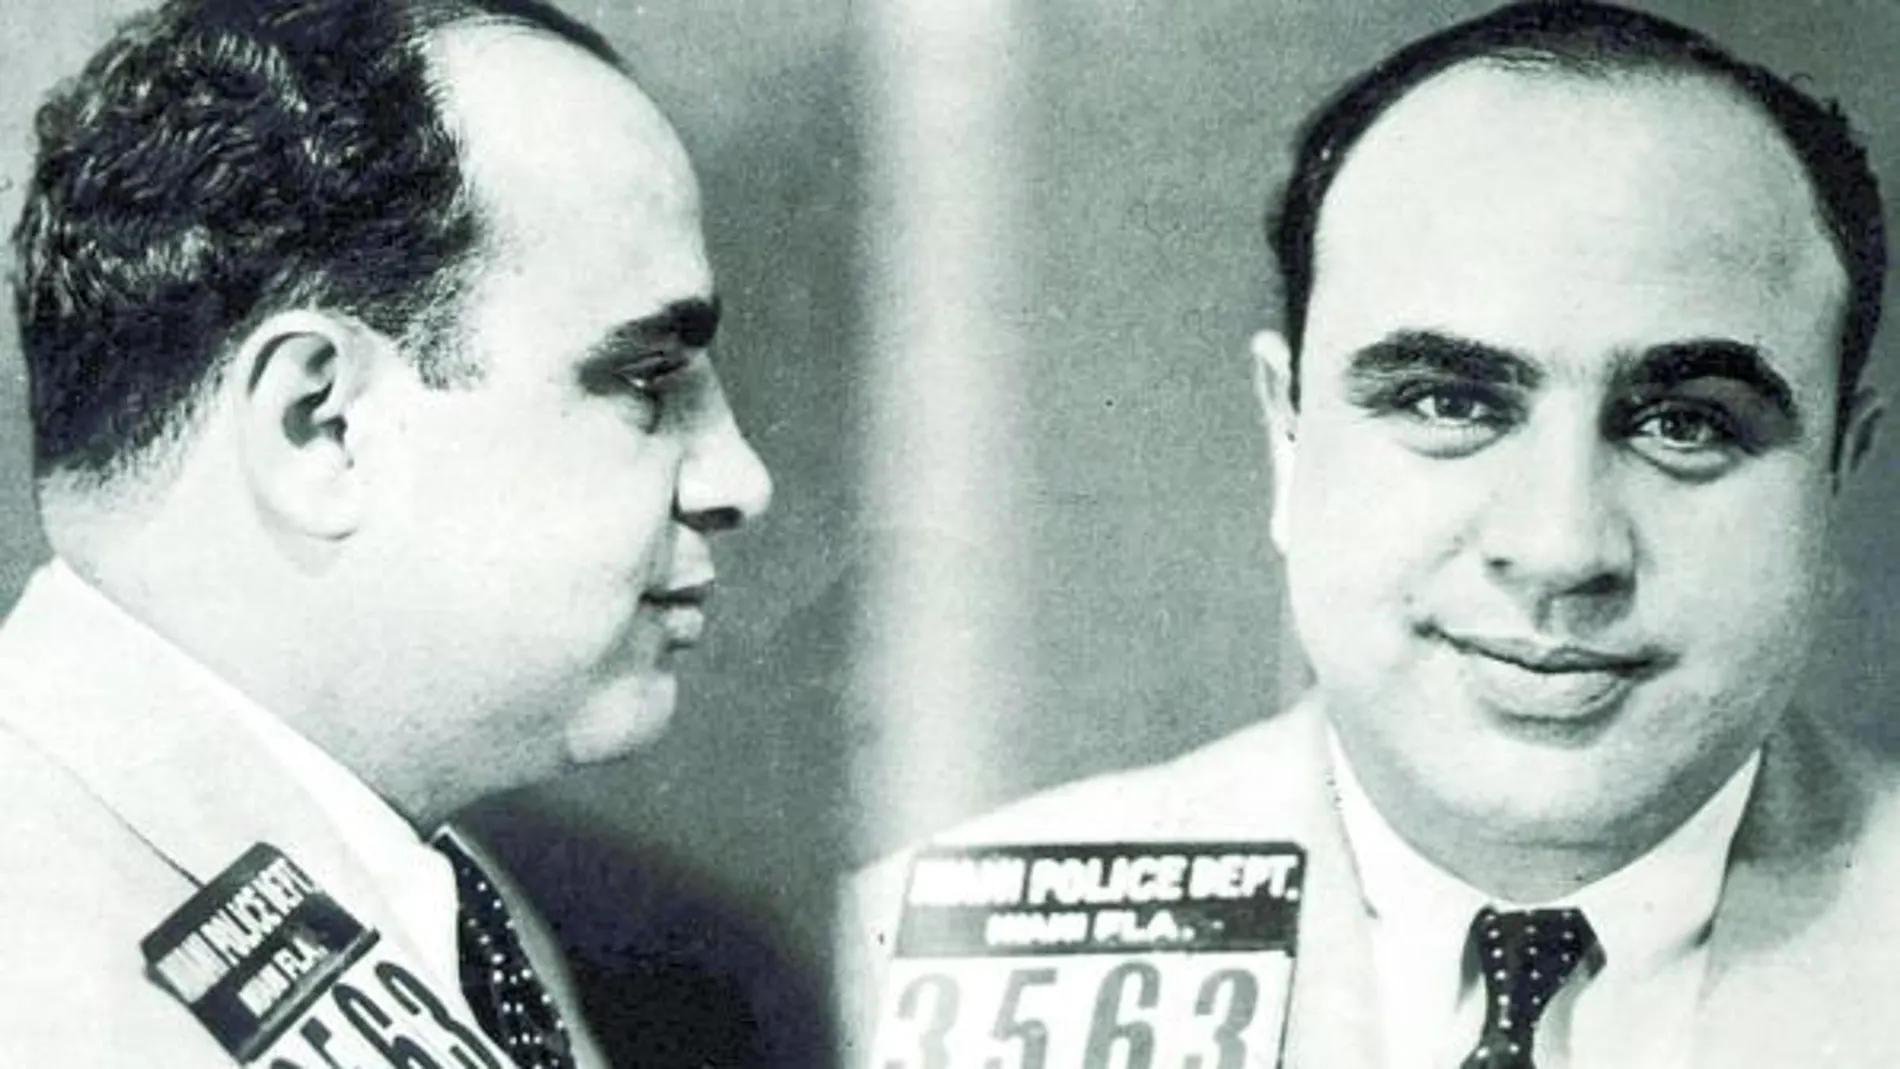 Al Capone era responsable de decena de asesinatos, pero fue detenido por fraude fiscal